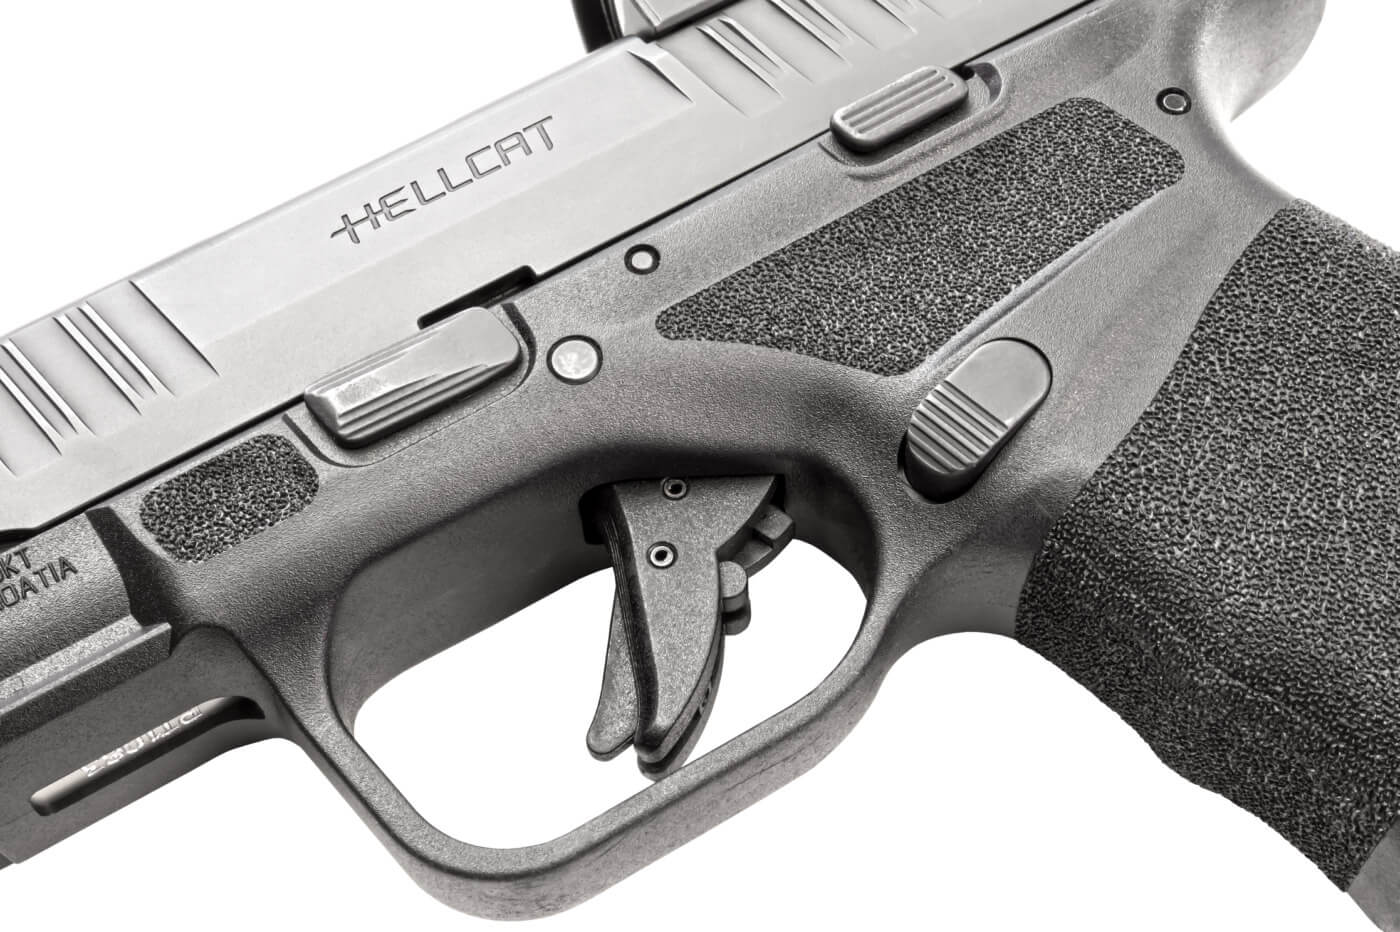 Trigger assembly of the Hellcat pistol